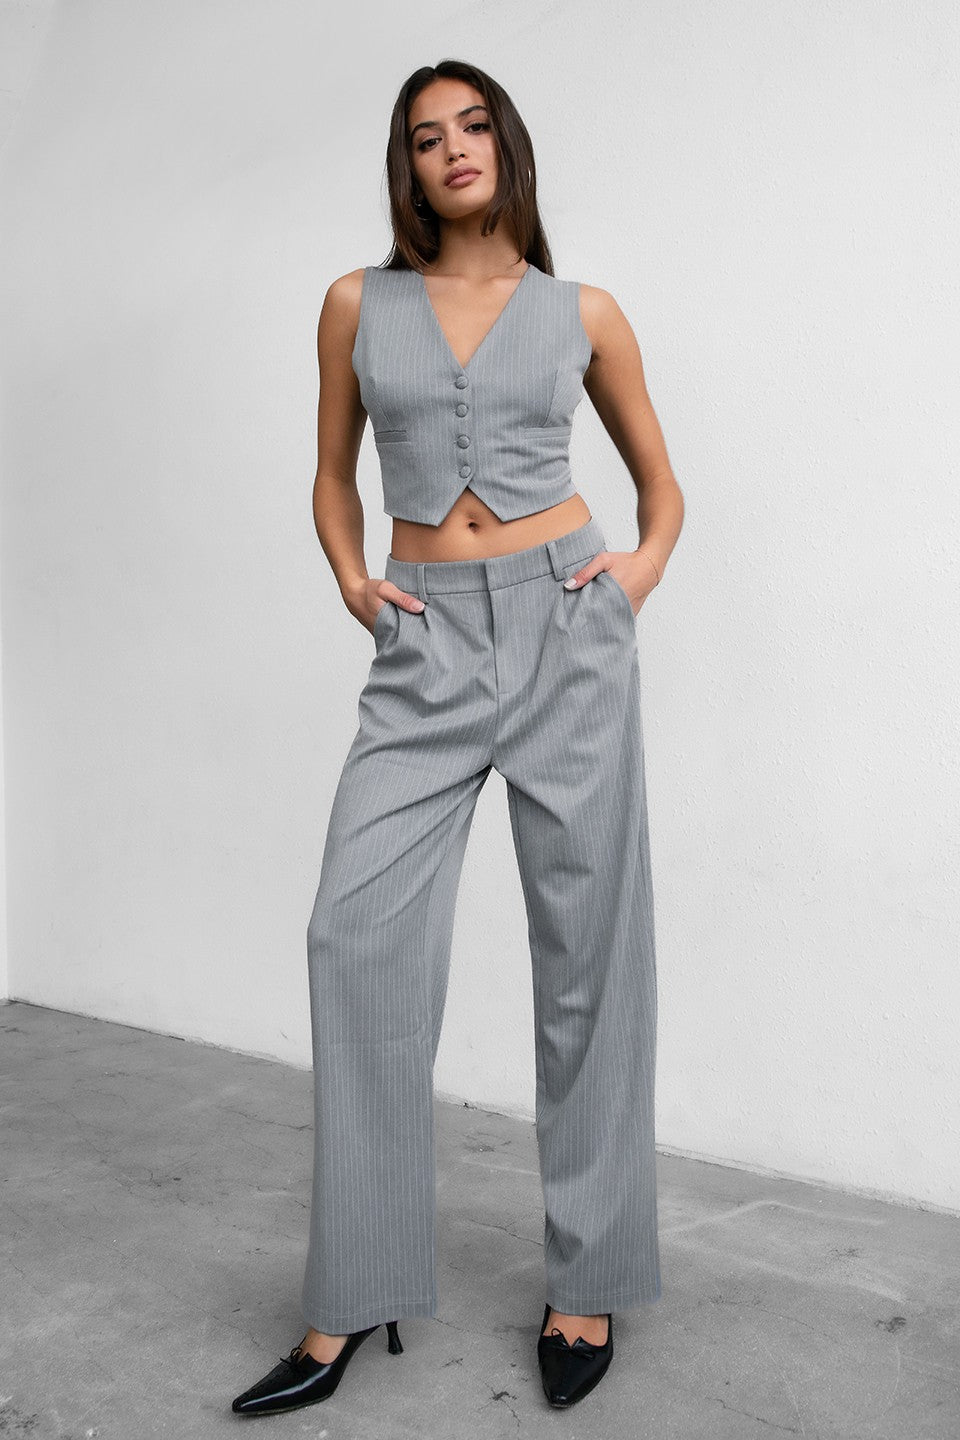 Women's Grey Striped Vest And Pants Set